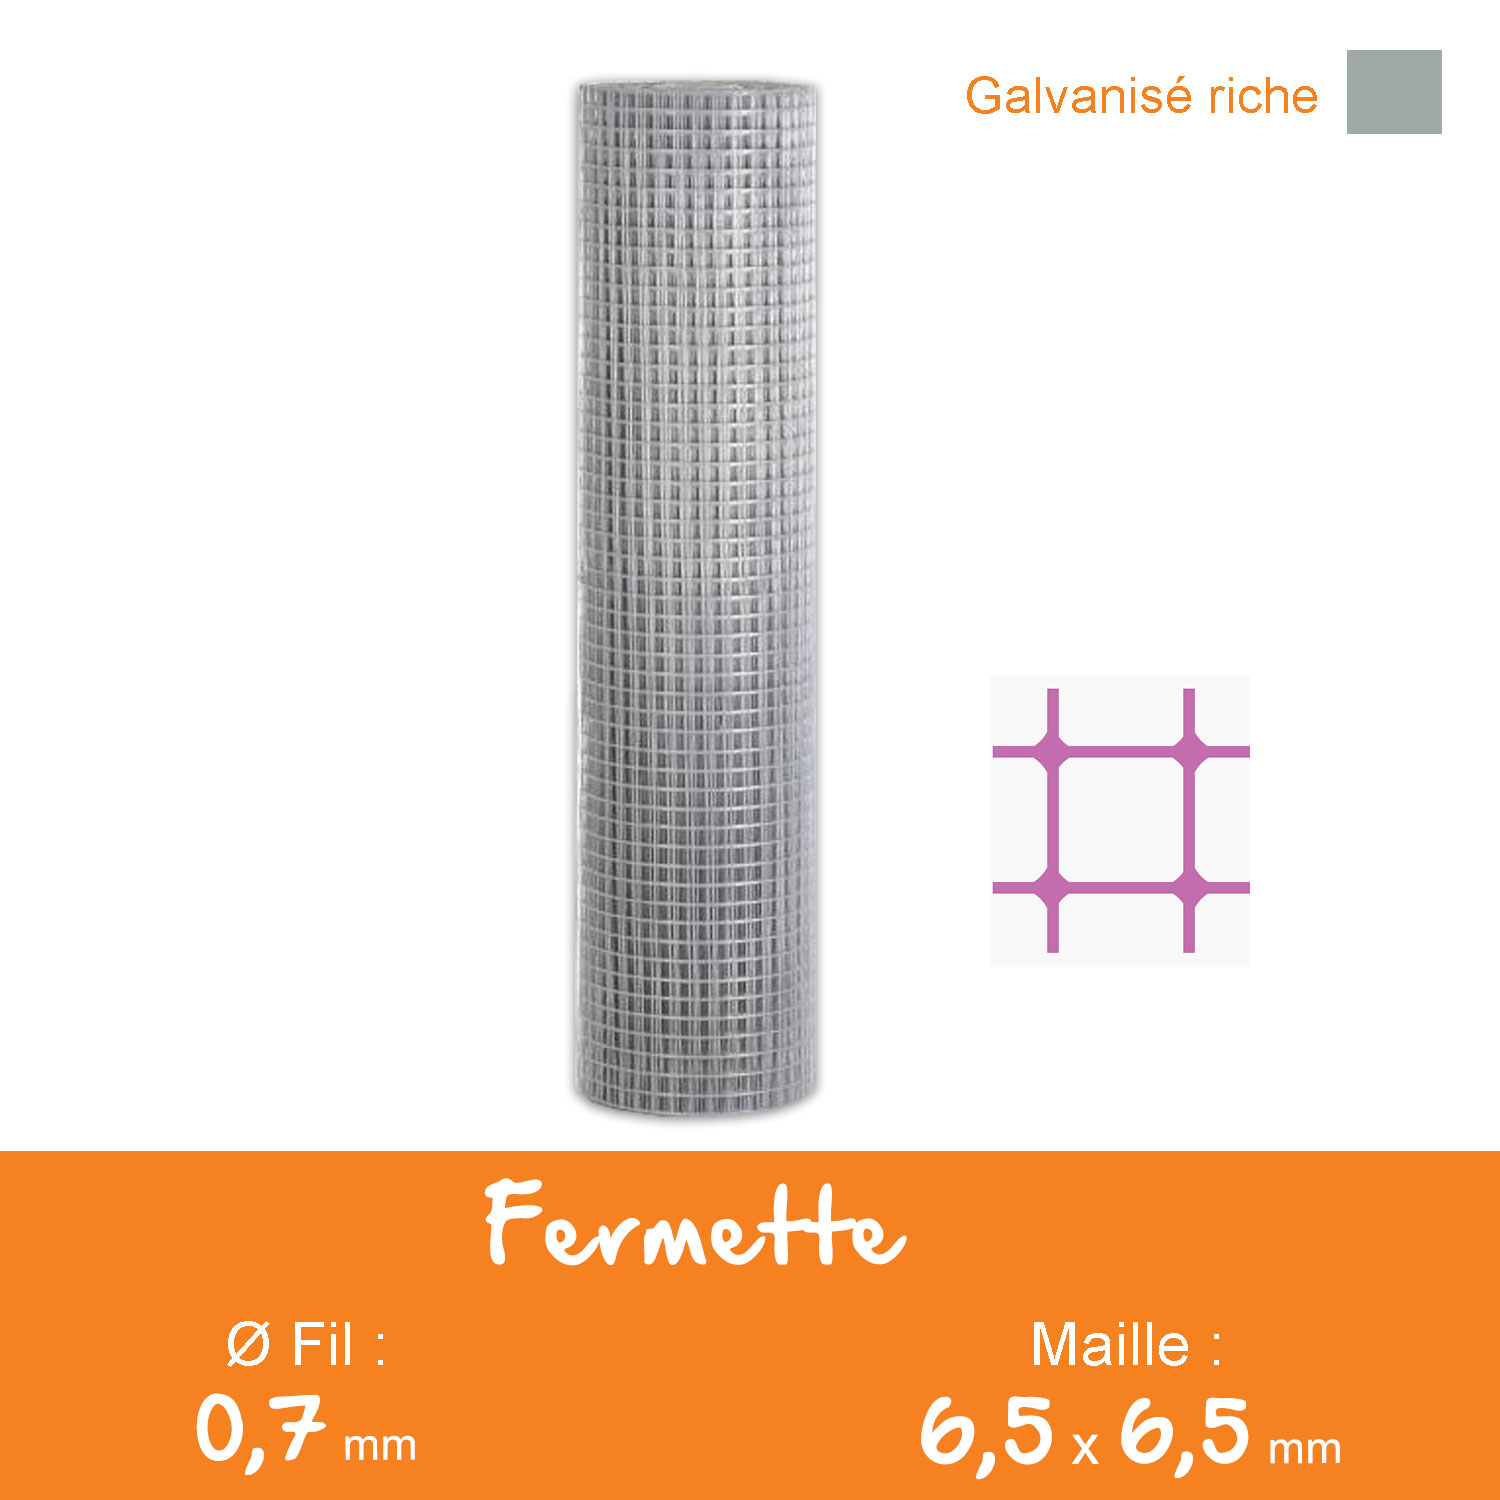 Fermette Galvanisée Maille 6,5x6,5mm Ø0,7mm Ht.1m00 Lg.25ml